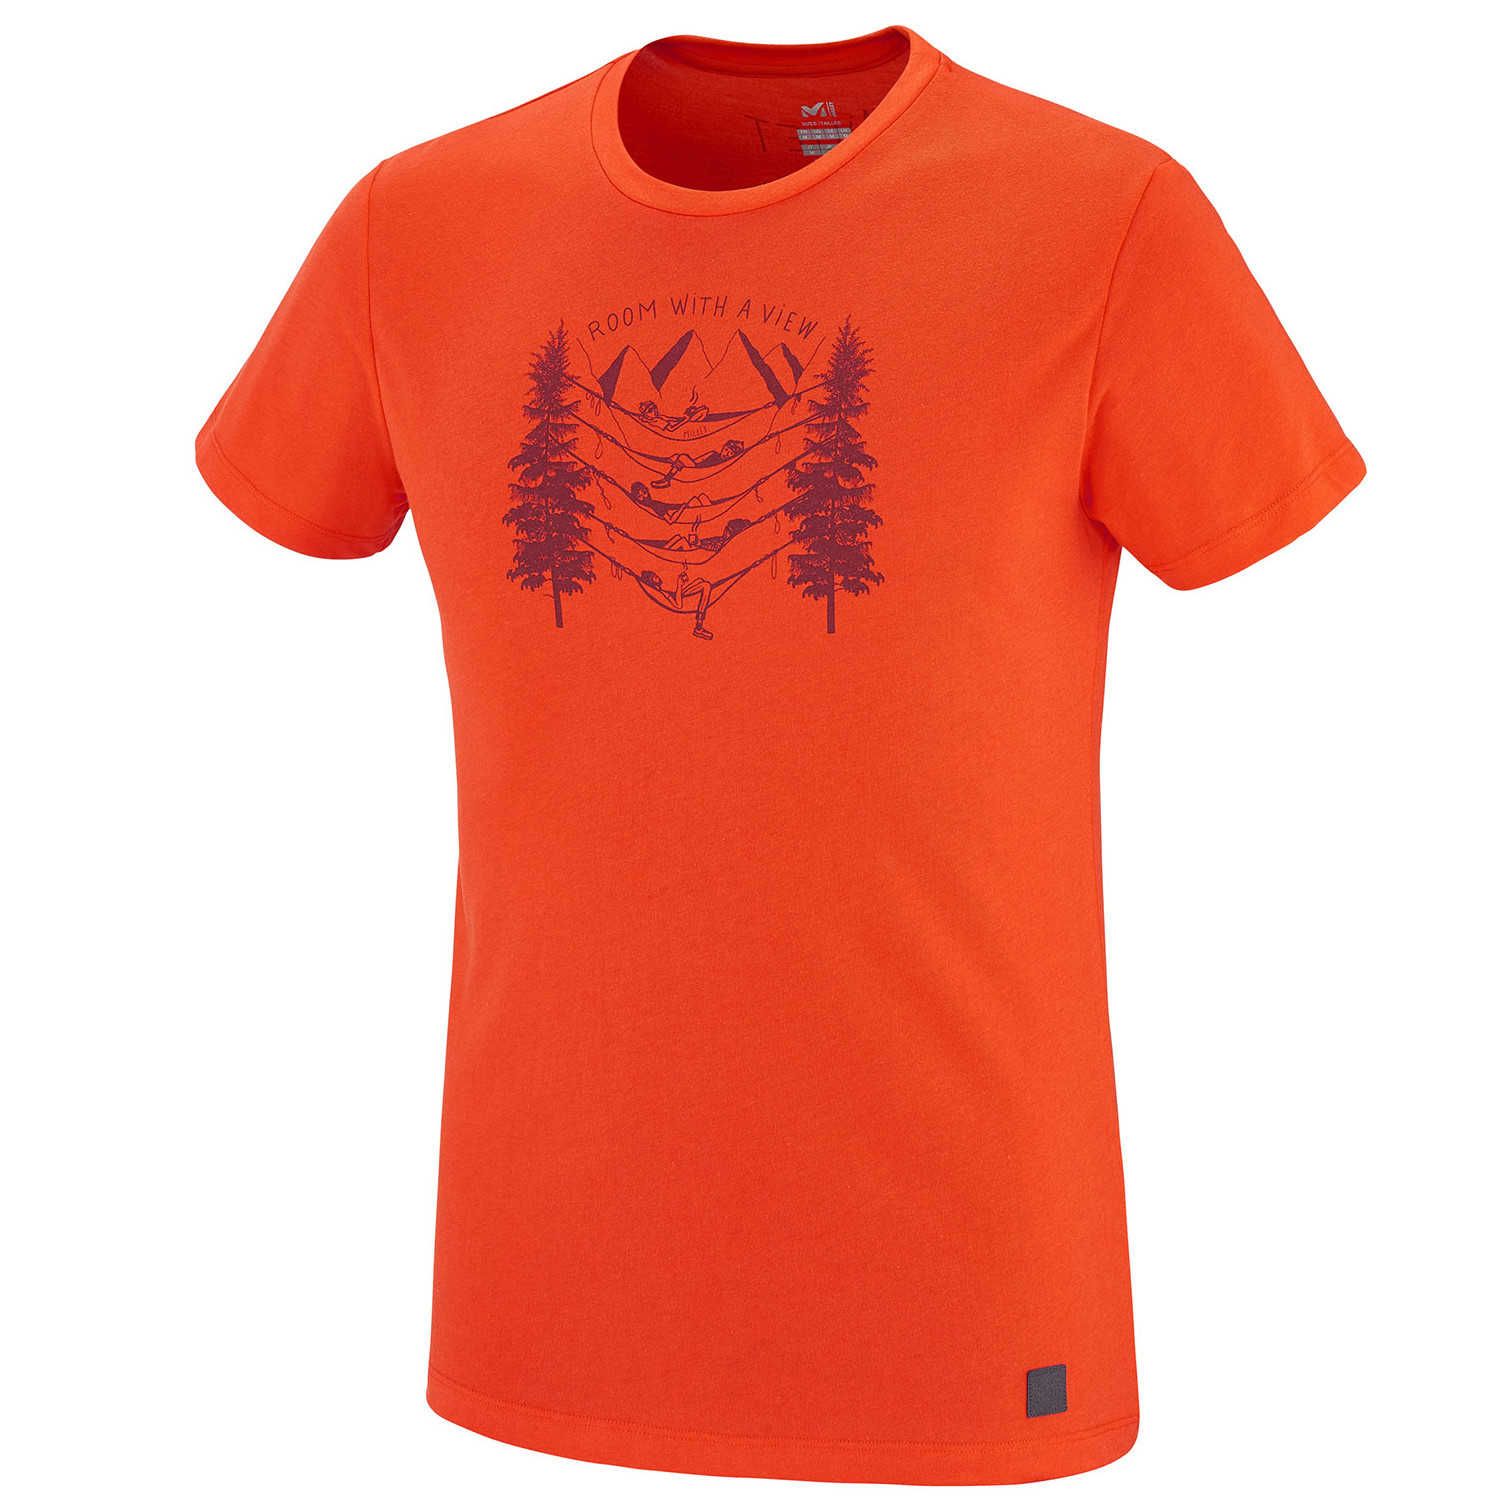 Escalade - Tee-shirt homme - Orange BARRINHA TS SS